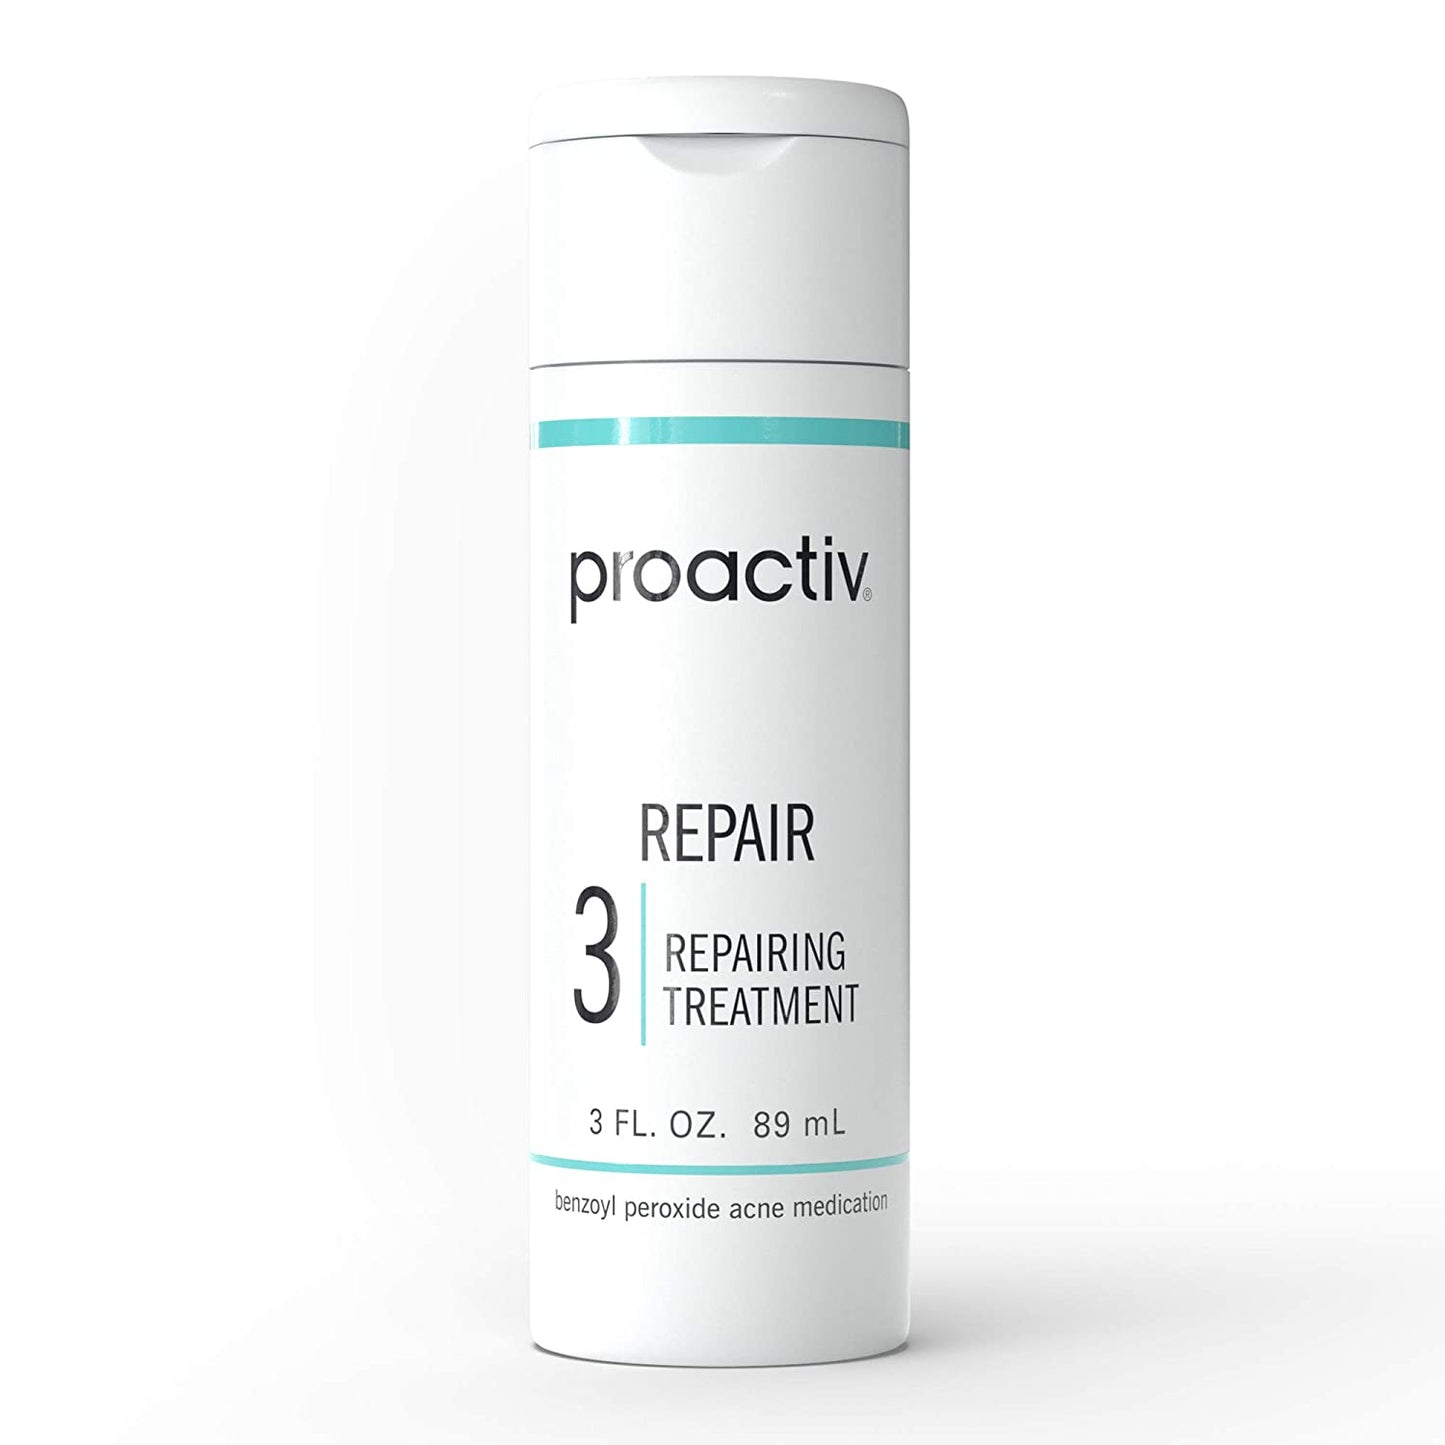 Proactiv 3 Repair Repairing Acne Treatment Benzoyl Peroxide Acne Medication, 3 fl.oz / 89 ml